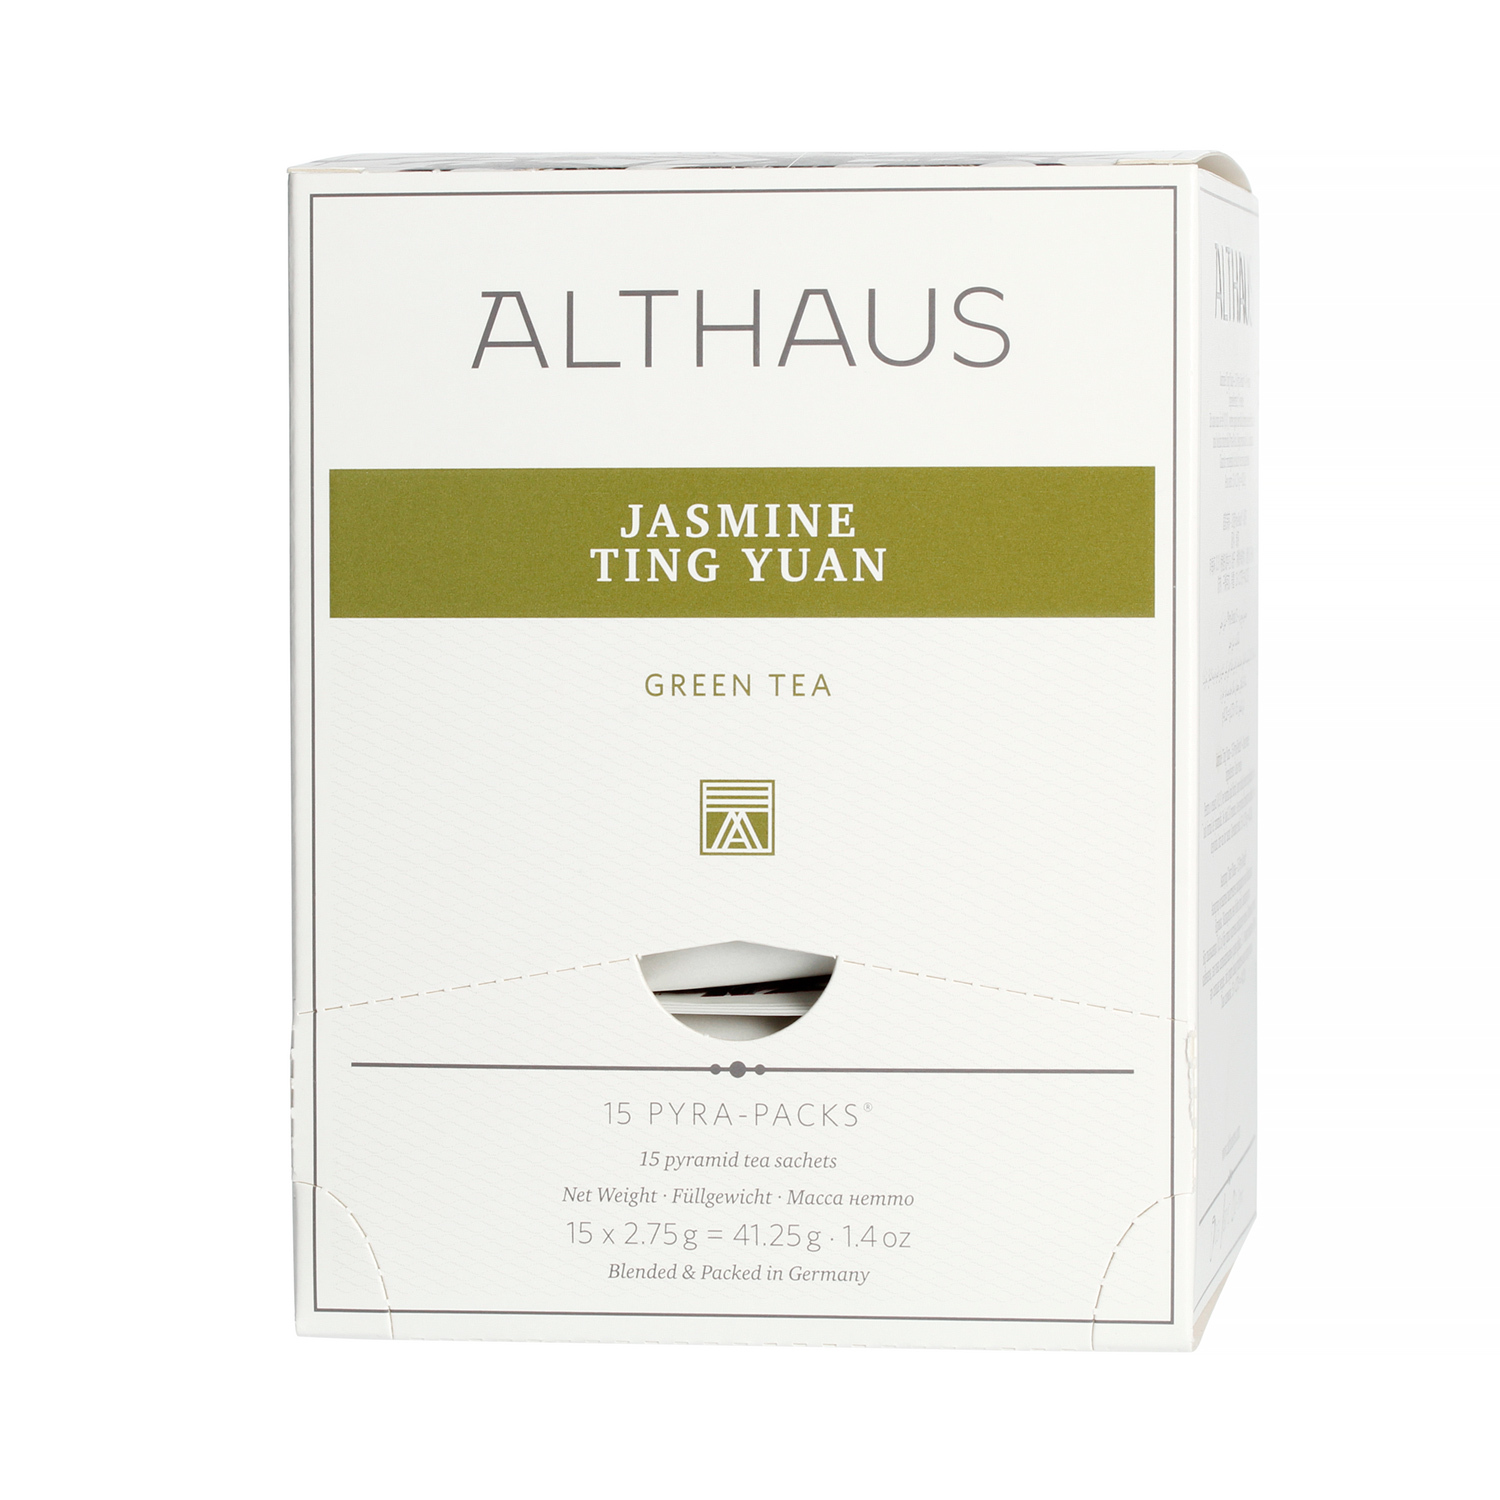 Althaus - Jasmine Ting Yuan Pyra Pack - 15 Tea Pyramids